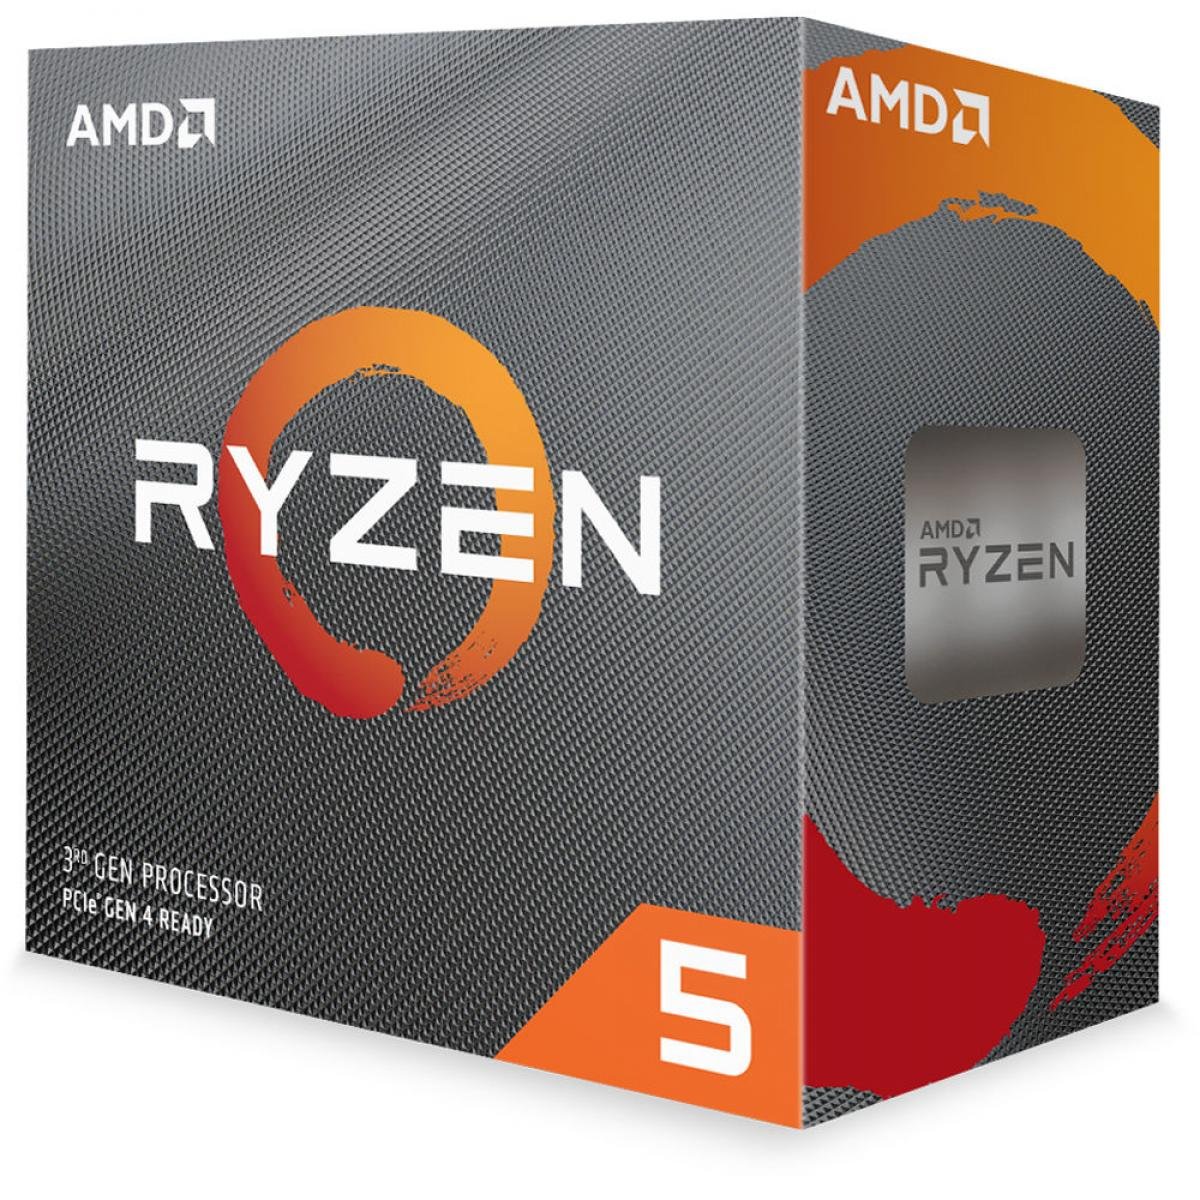 Amd Ryzen 5 3600 6-core 3.6 Ghz (4.2 Ghz Max Boost) |  AMD |  Components |  CPU & Processor